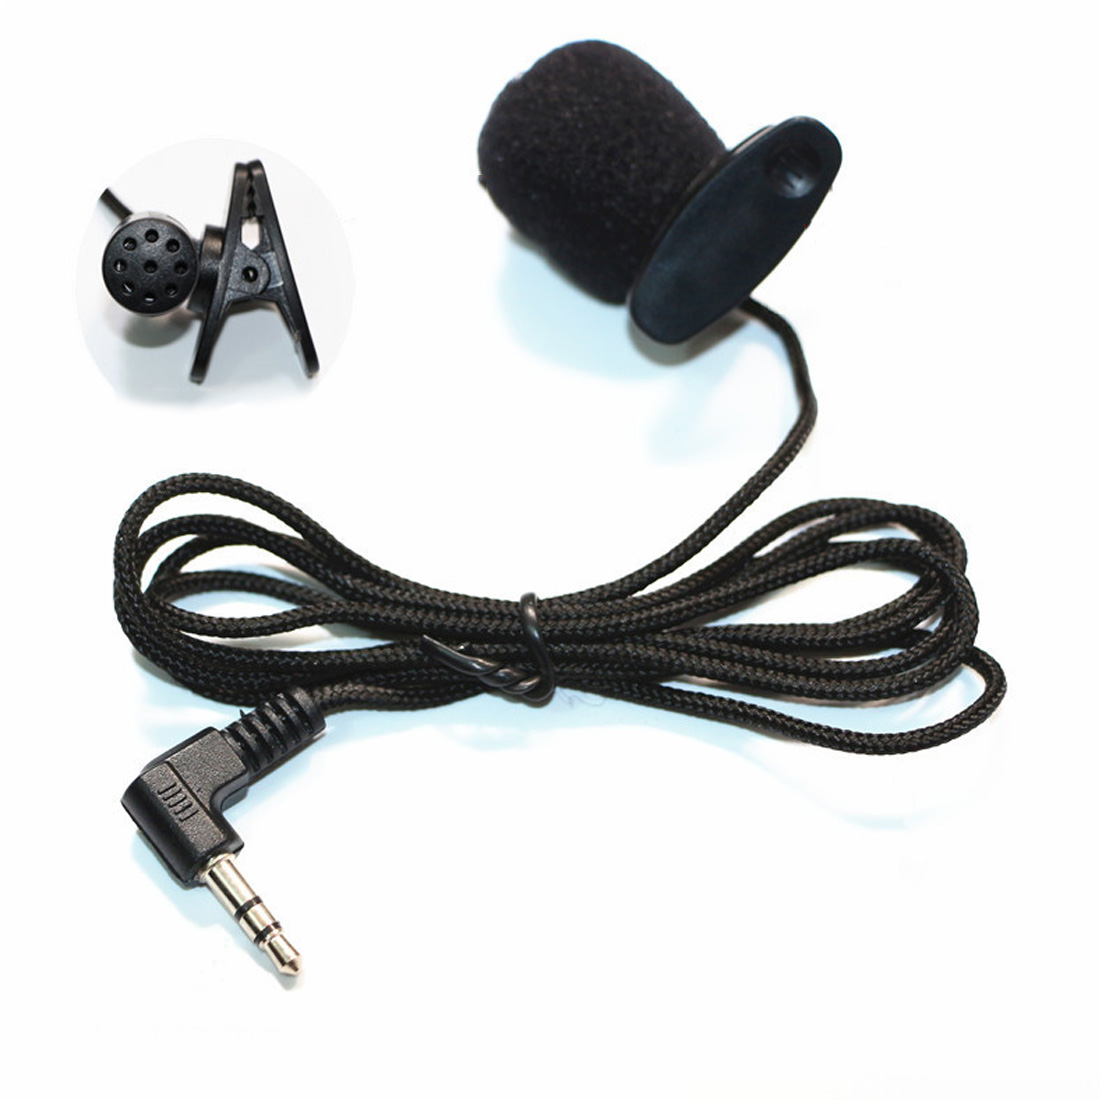 Marsnaska Voor Pc Auto Dvd Gps Speler Audio Microfoon 1.18 M Flexibele 3.5 Mm Stereo Jack Mini Universial Microfoon Met clip